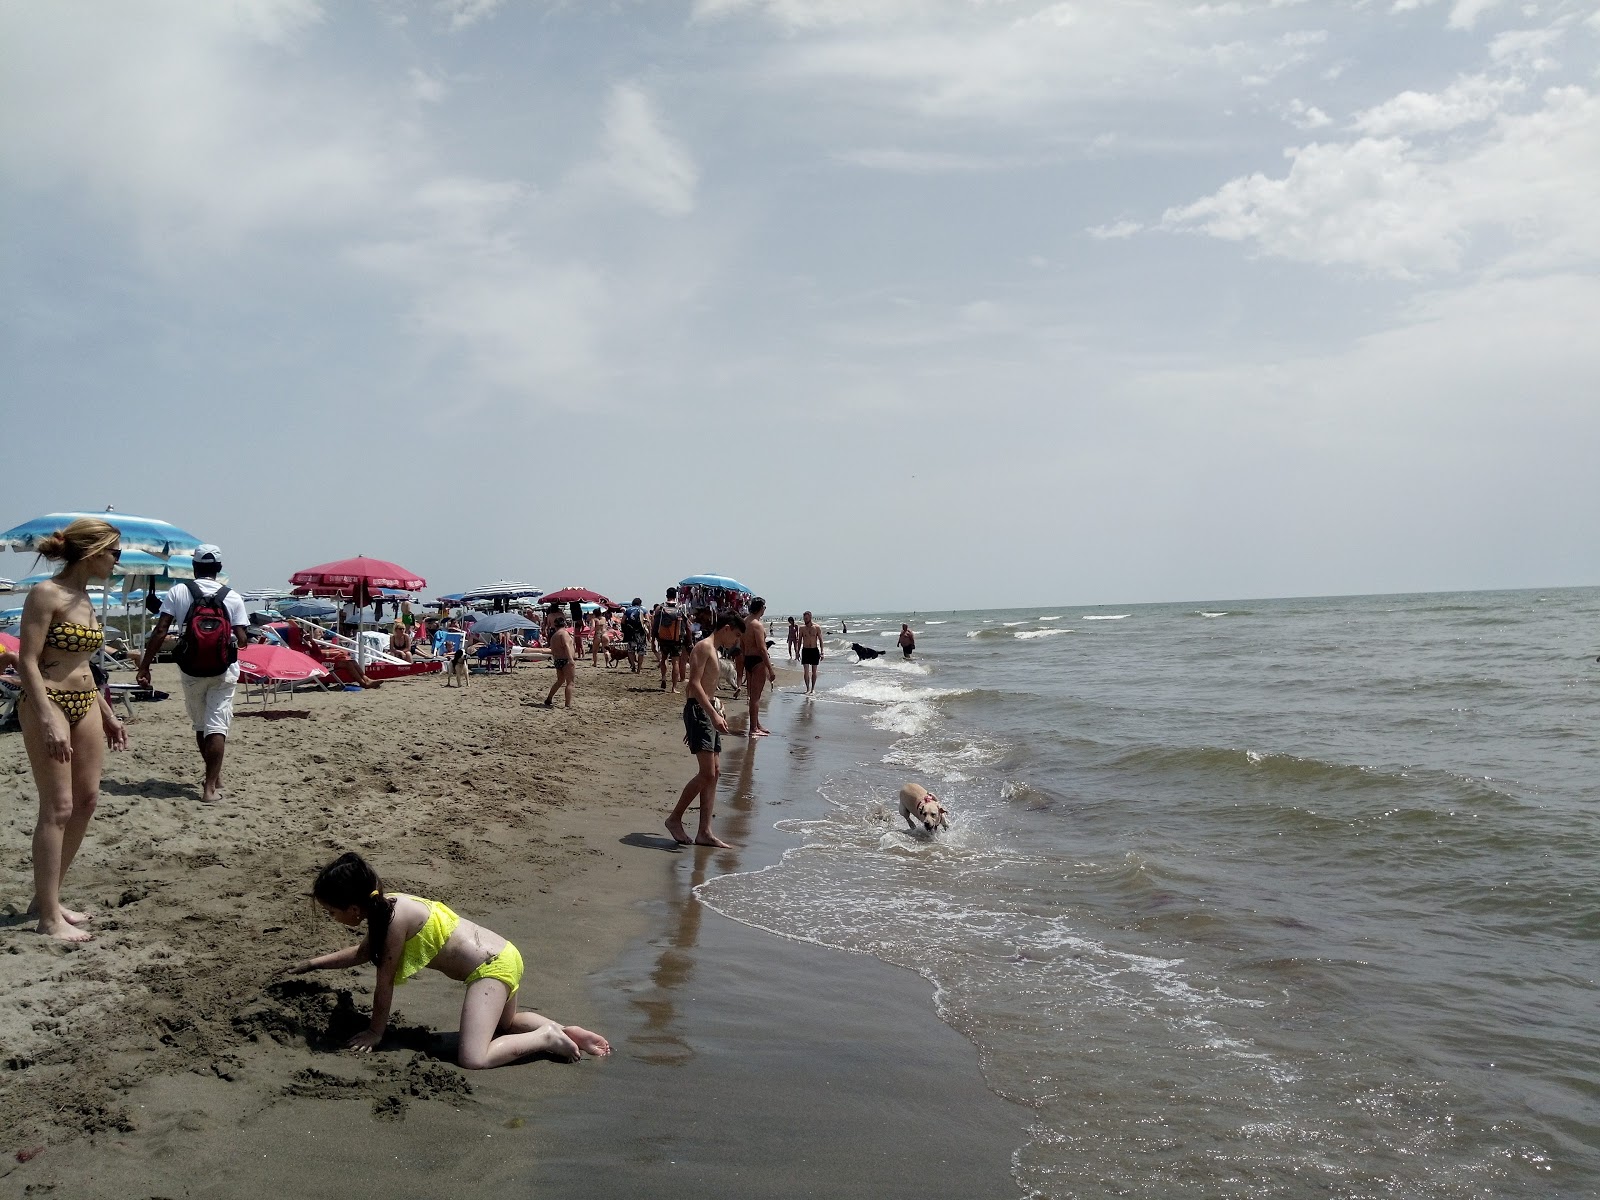 Photo of Bocca di Leone beach beach resort area